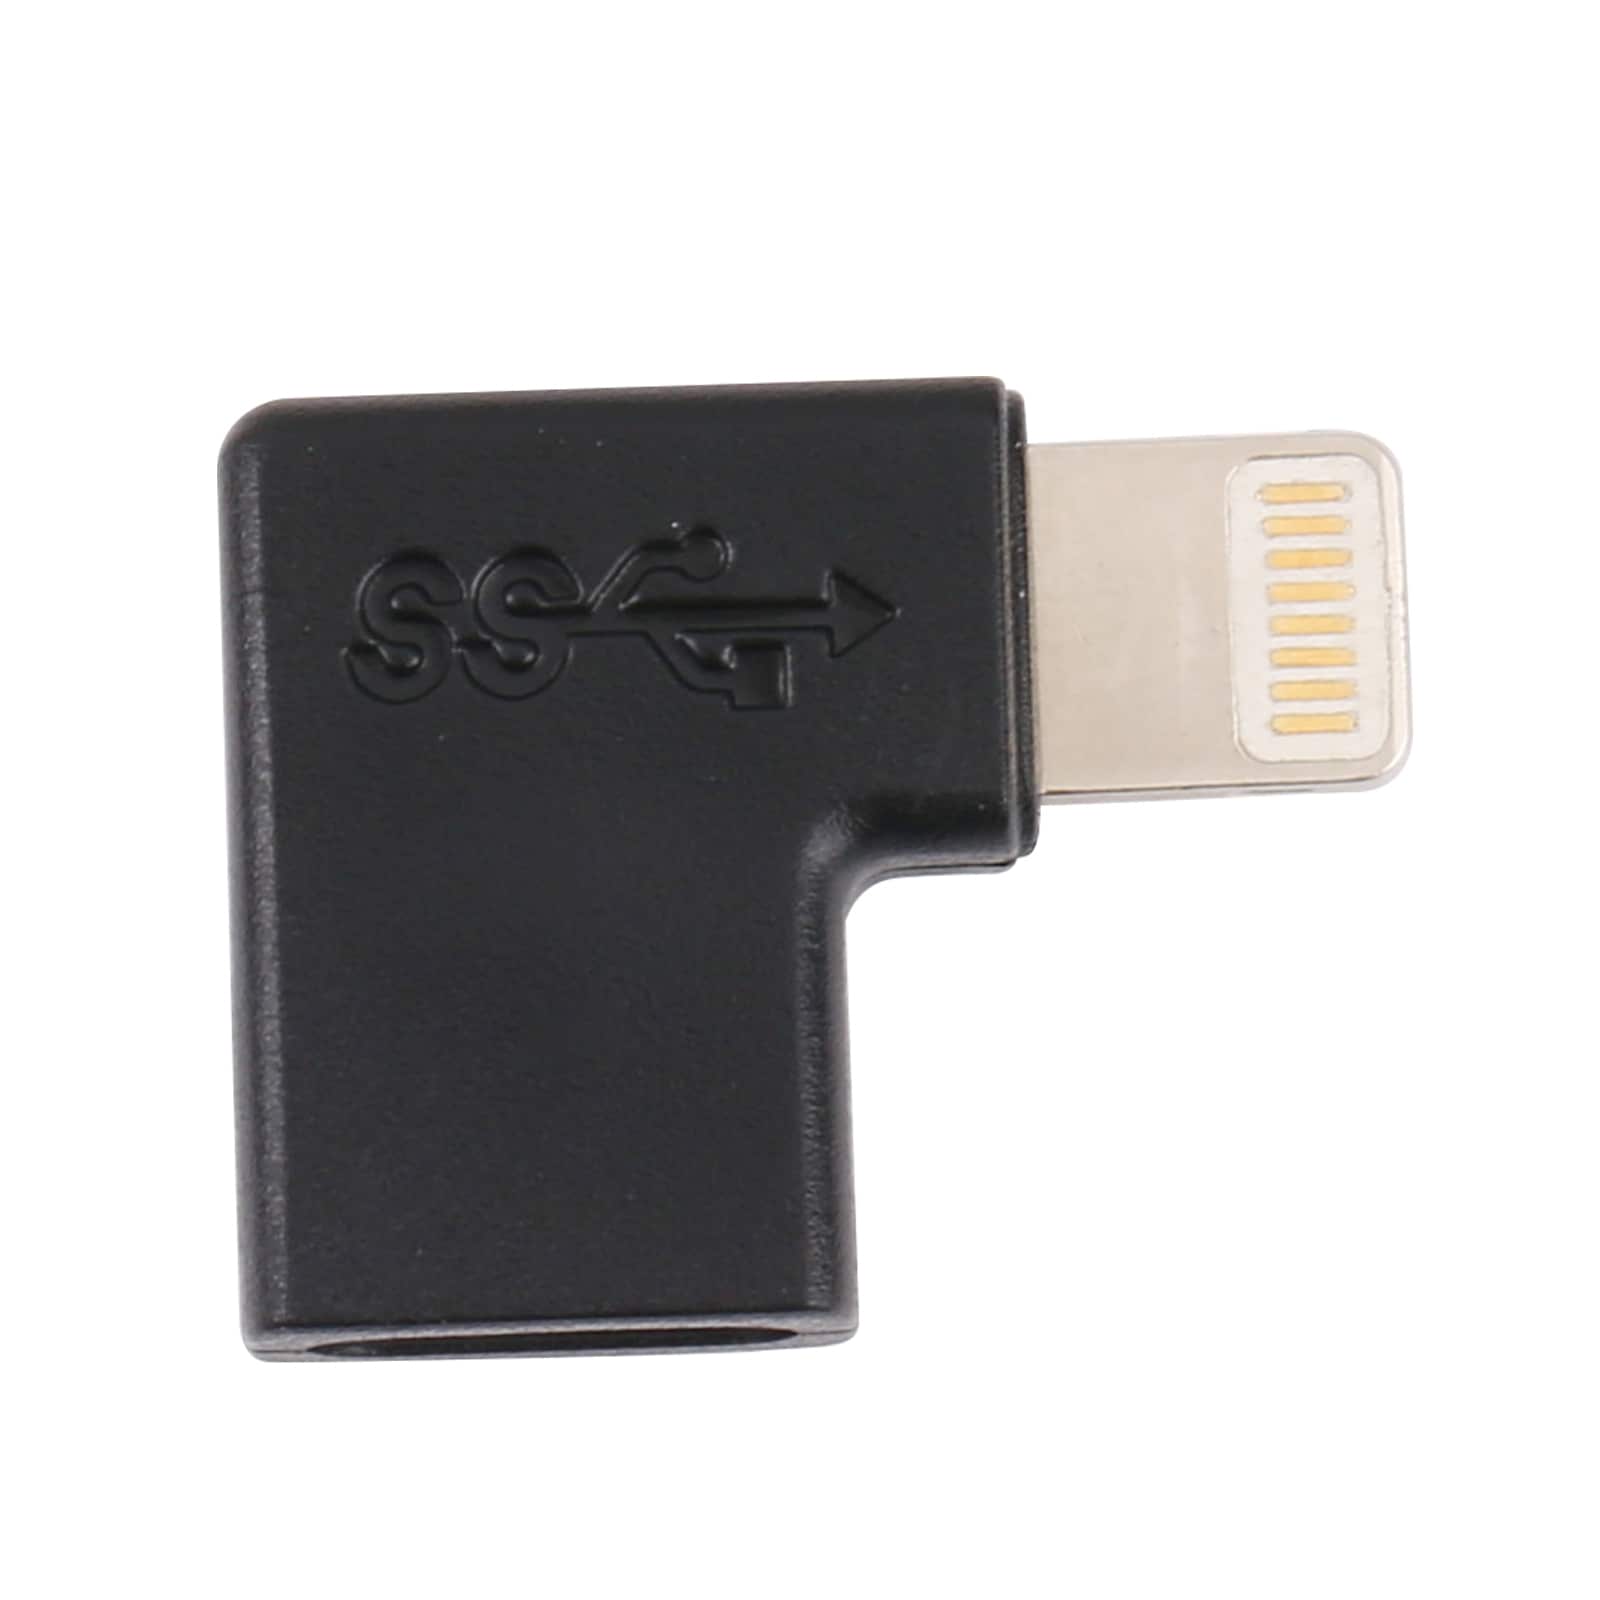 iPhone till USB-C adapter